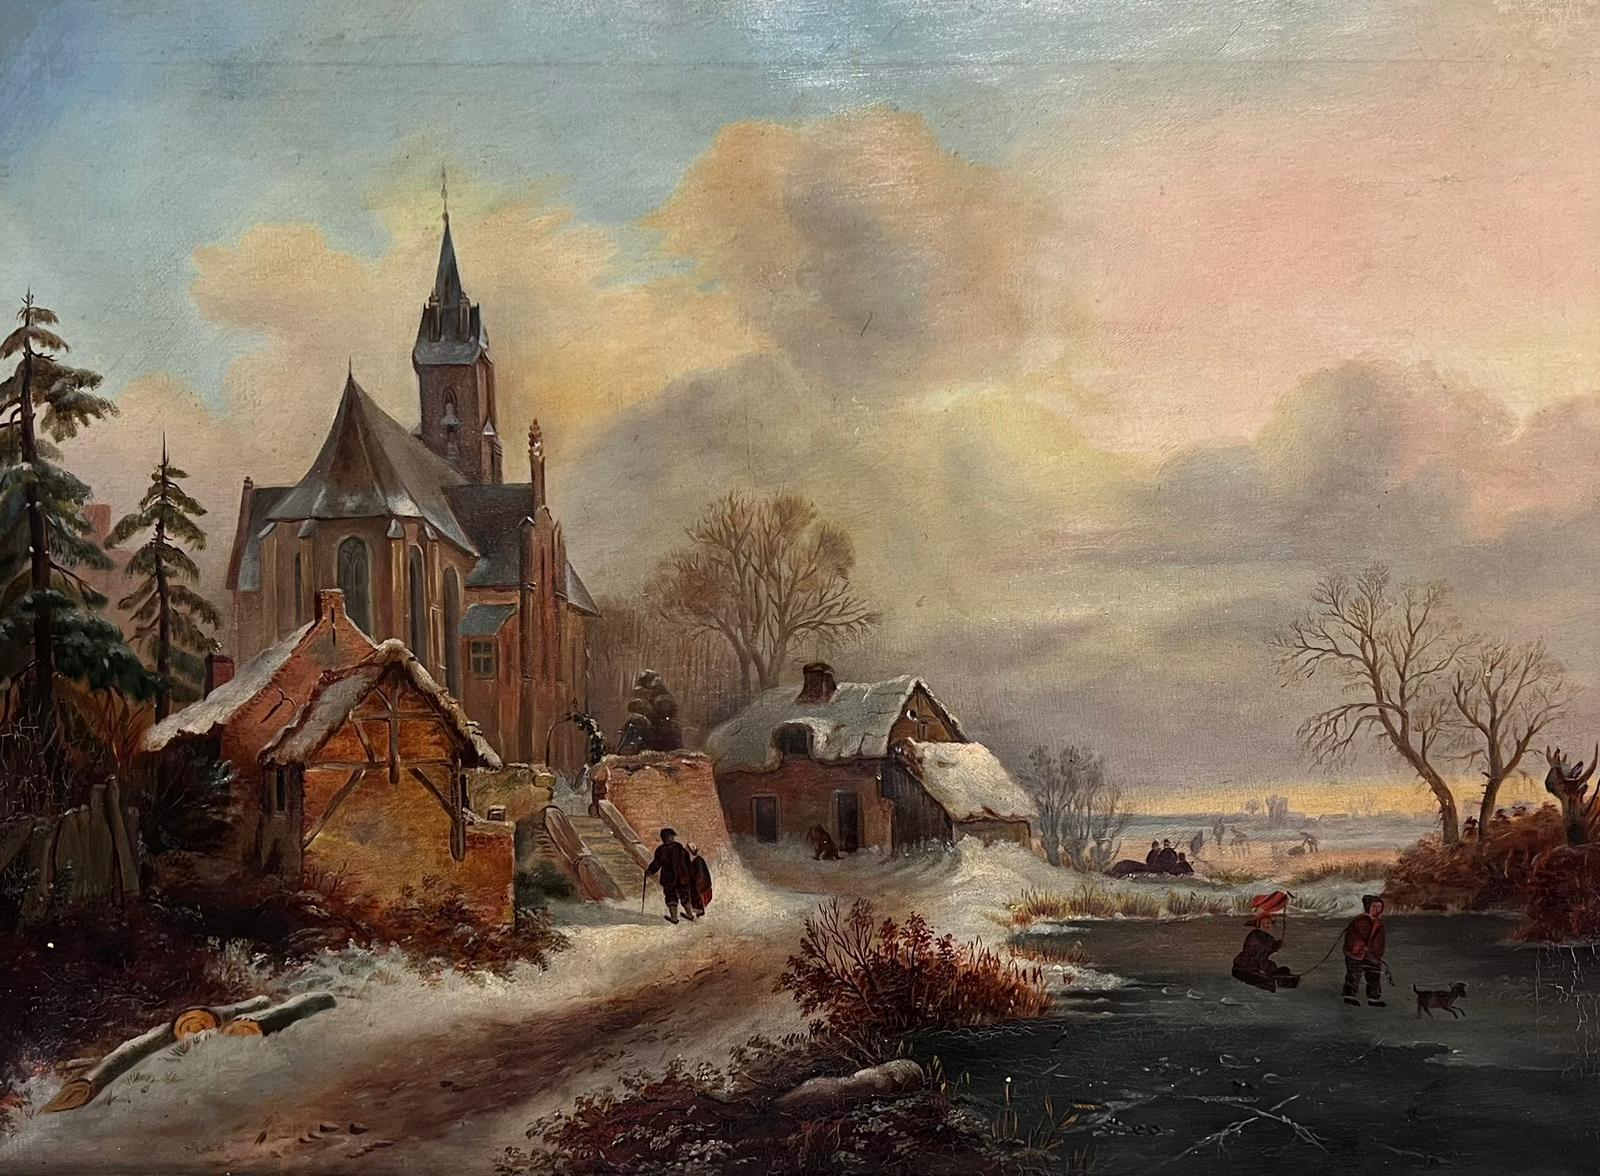 Dutch 19th century School Landscape Painting - Figures in Winter Dutch Snow Landscape Large 19th Century Oil on Canvas Painting